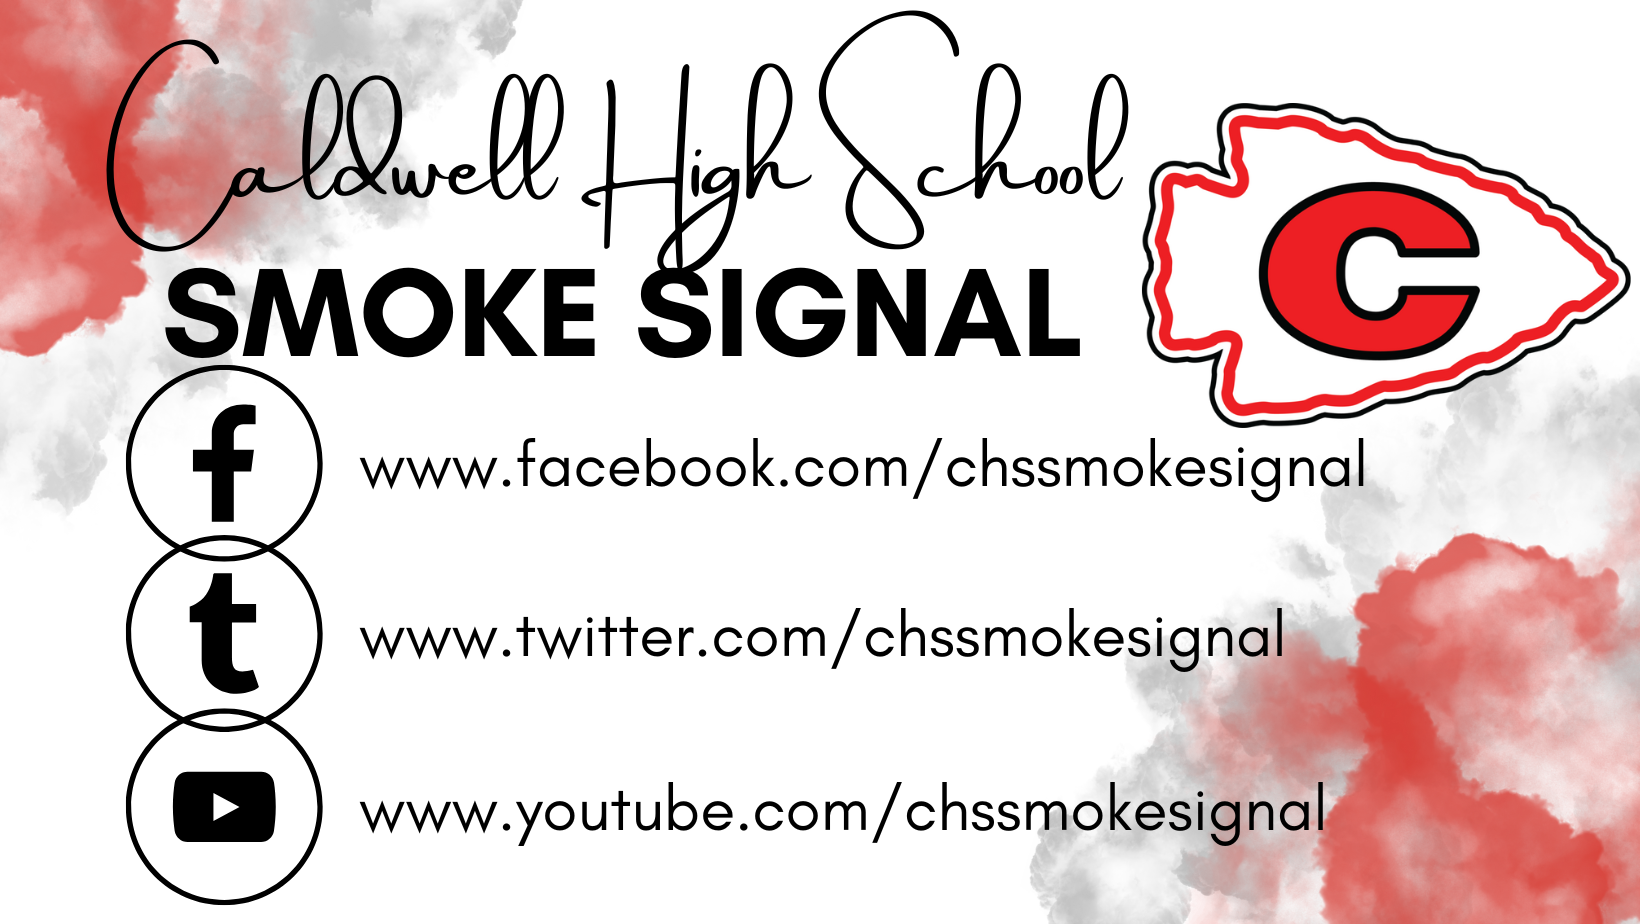 caldwell high school smoke signal